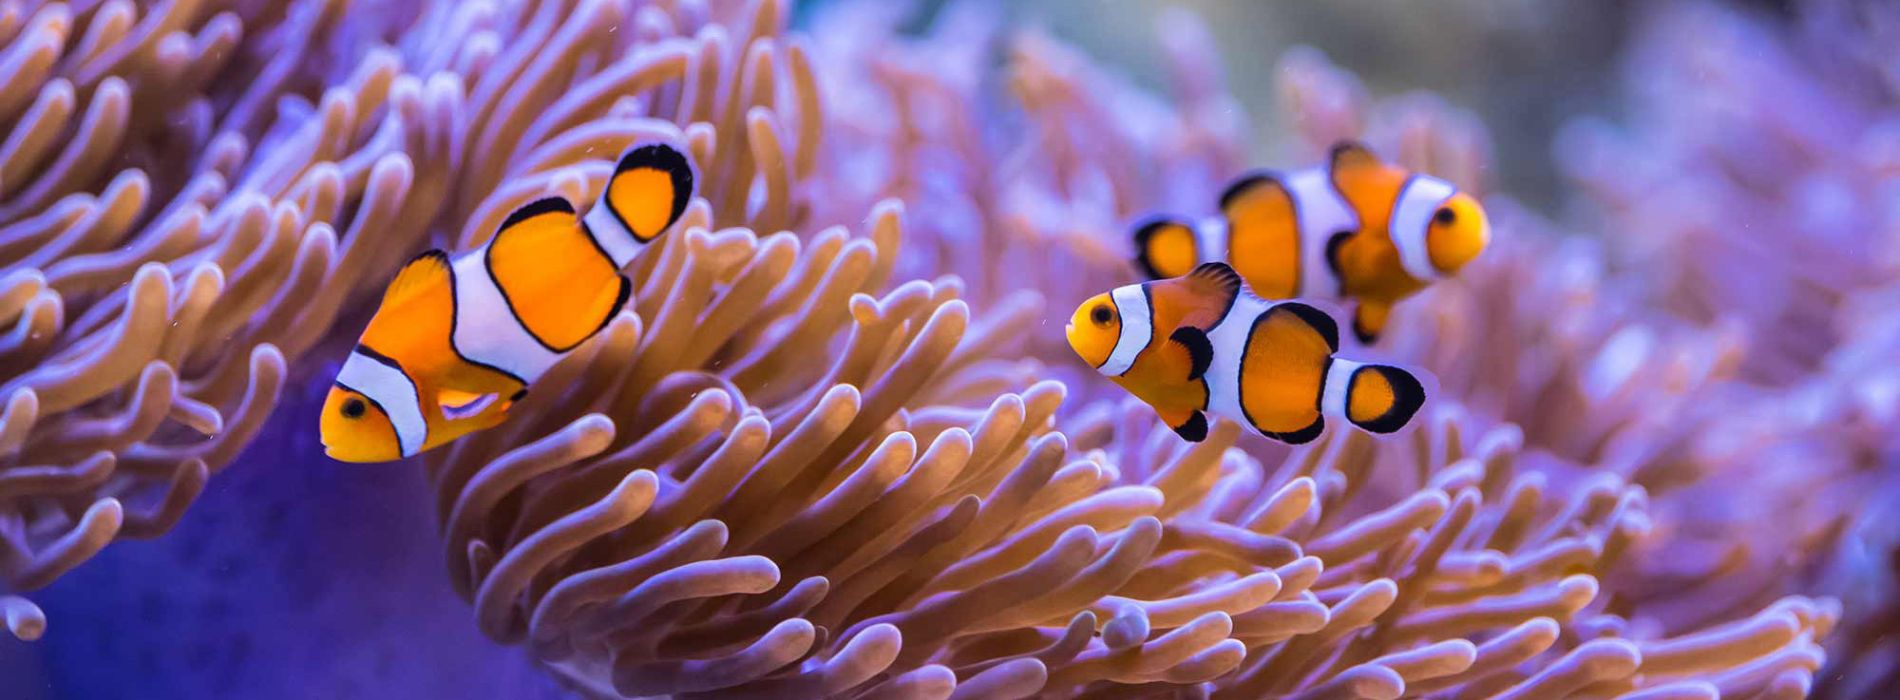 sea-anemones-habitat-and-environment